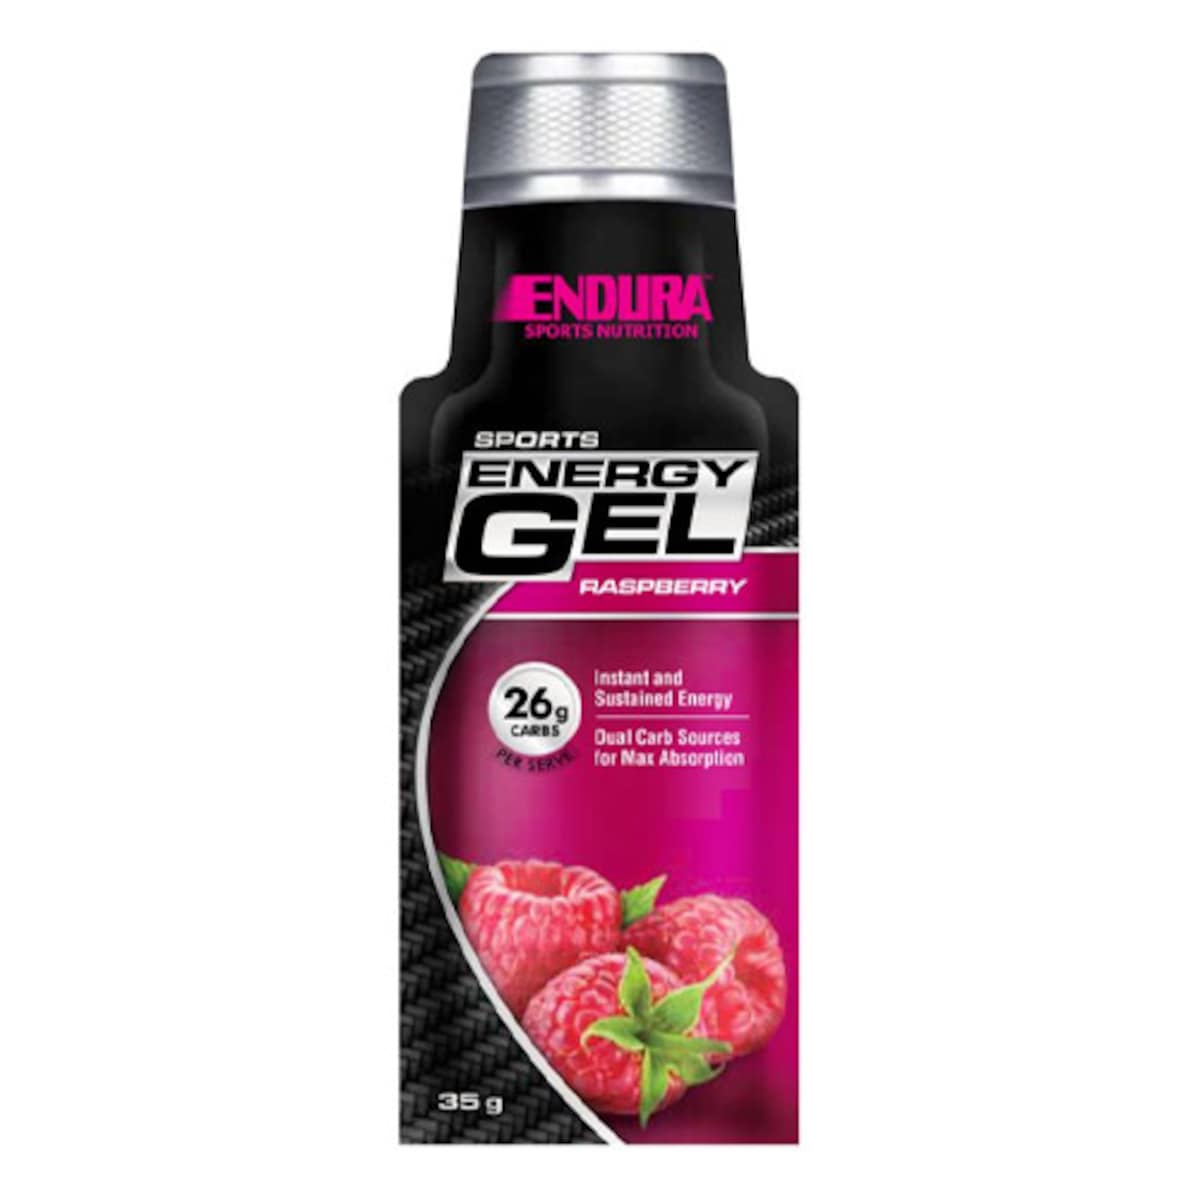 Endura Sports Energy Gel Raspberry 35g Australia